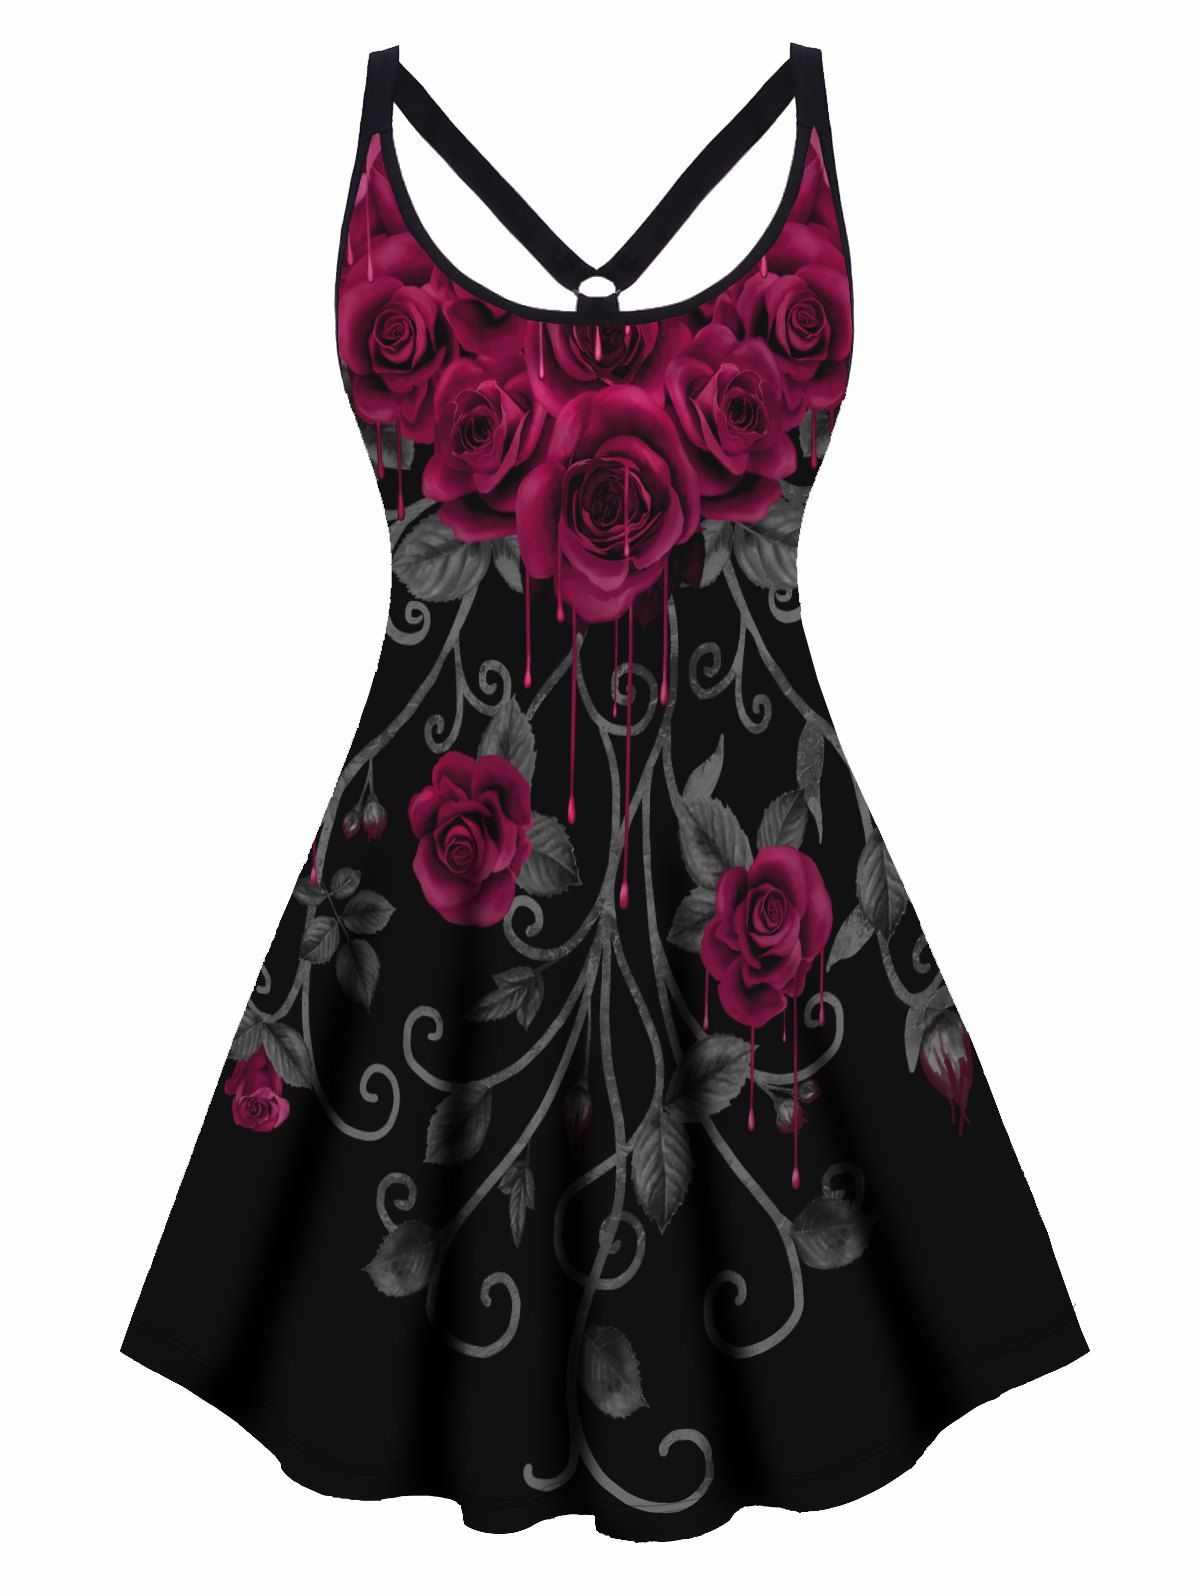 Plus Size Dress Gothic Dress Leaf Rose Print Cut Out High Waisted A Line Mini Dress - BLACK L